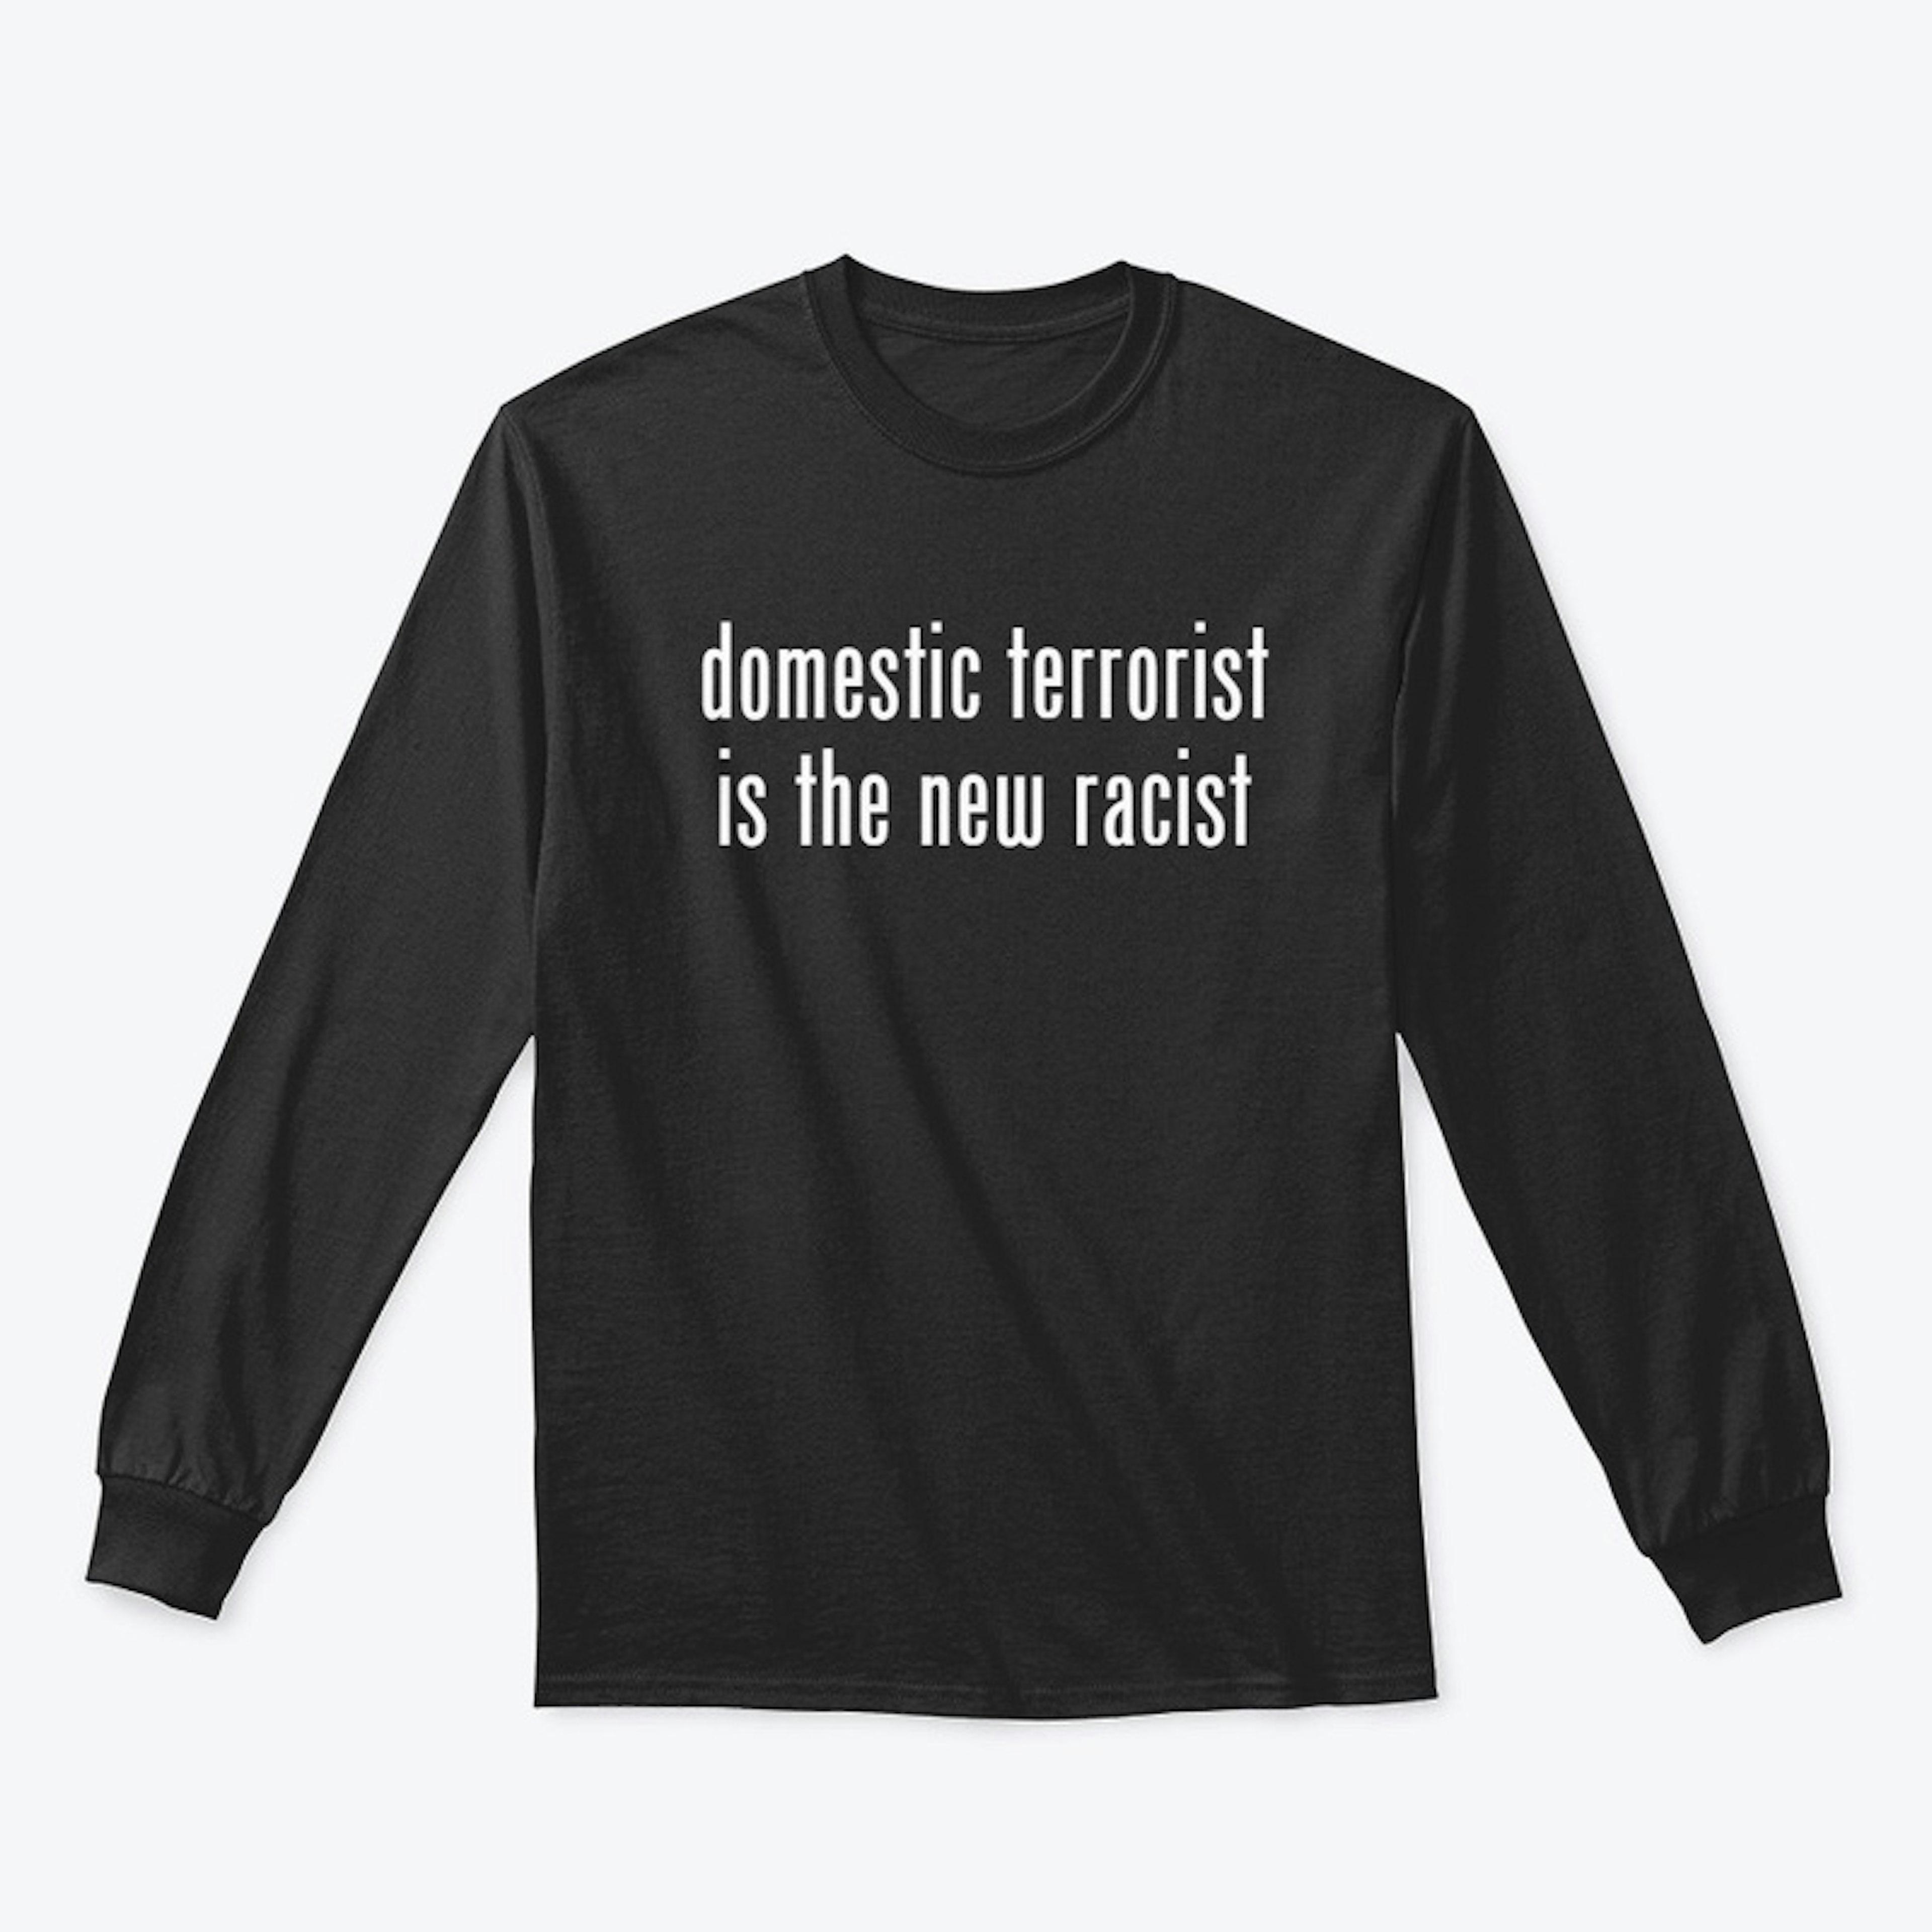 domestic terrorist is the new racist